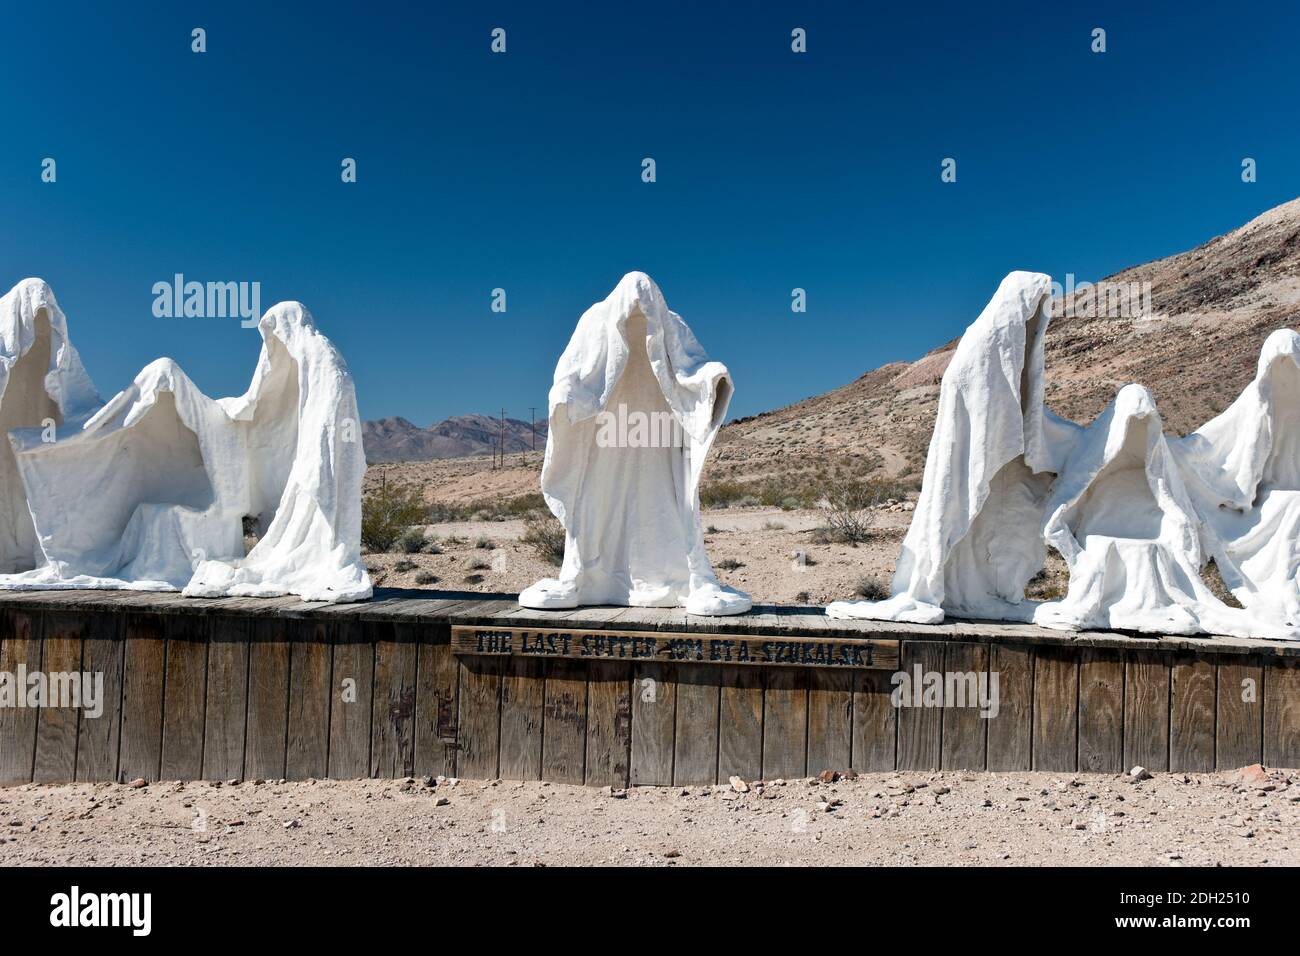 "L'ultima cena" di Charles Szukalski nella città fantasma di Rhyolite, Nevada. Foto Stock